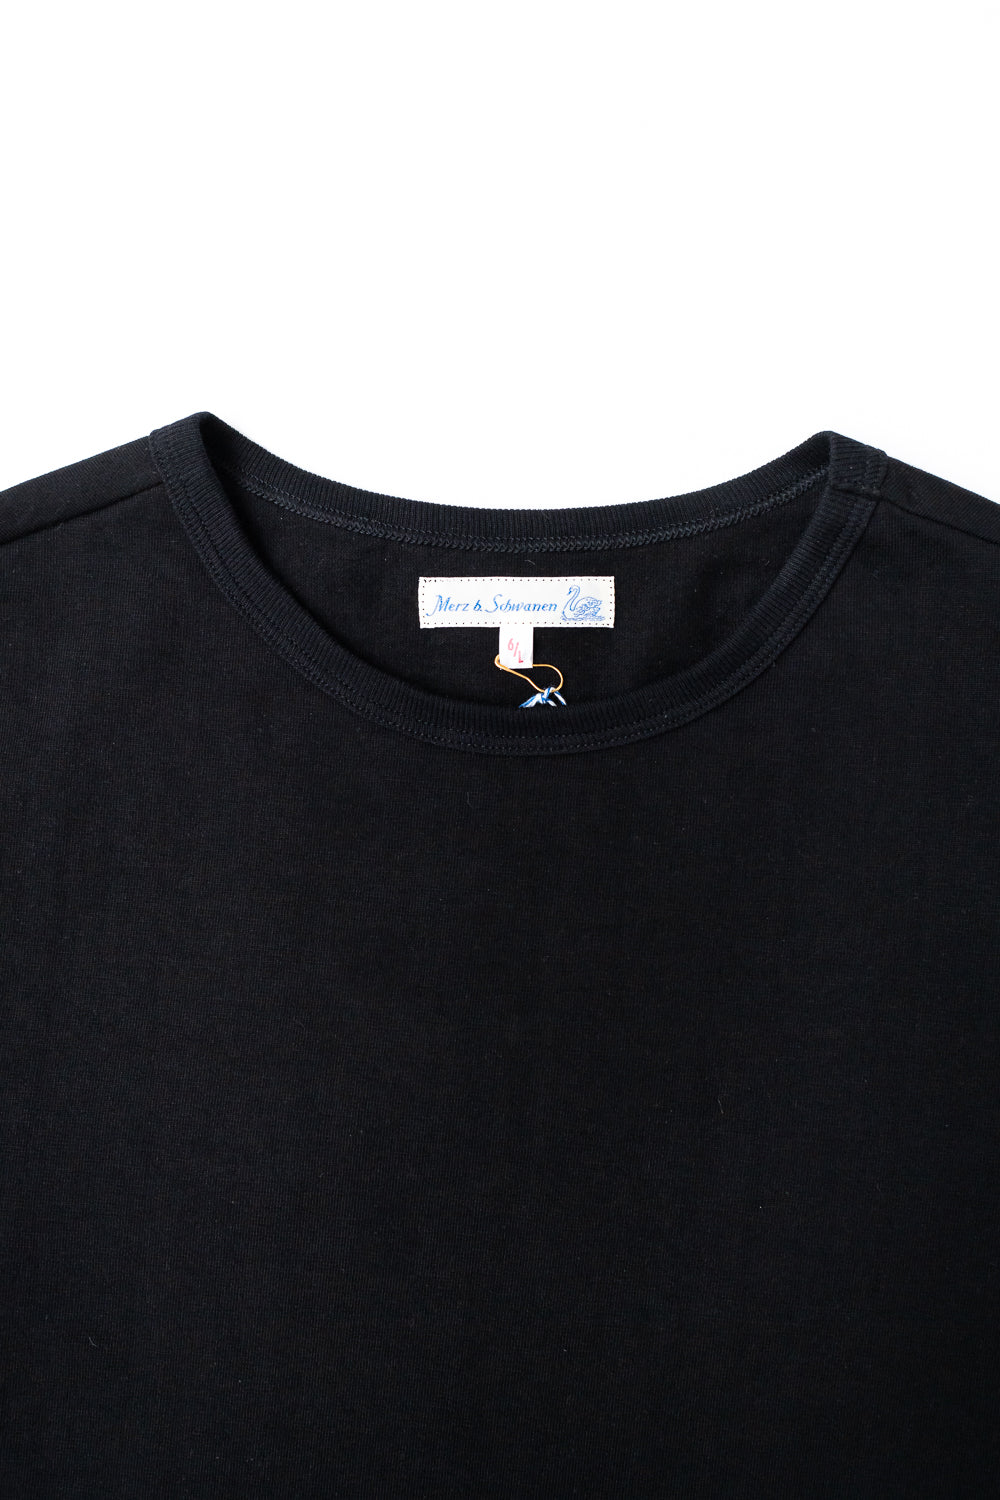 215.99 - 8.6oz Loopwheeled T-Shirt Classic Fit - Deep Black